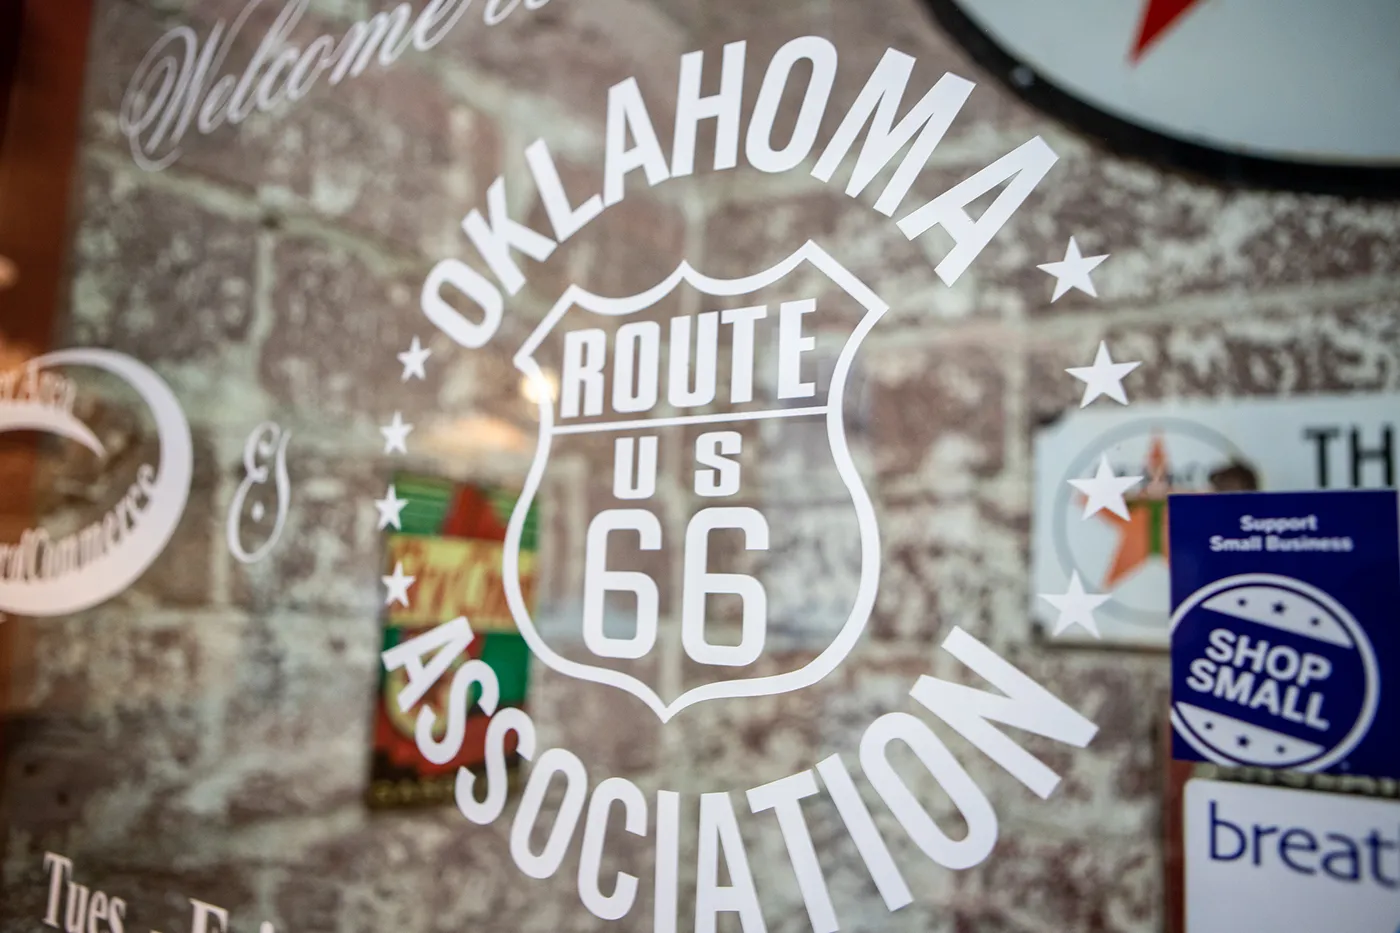 Route 66 Interpretive Center in Chandler, Oklahoma